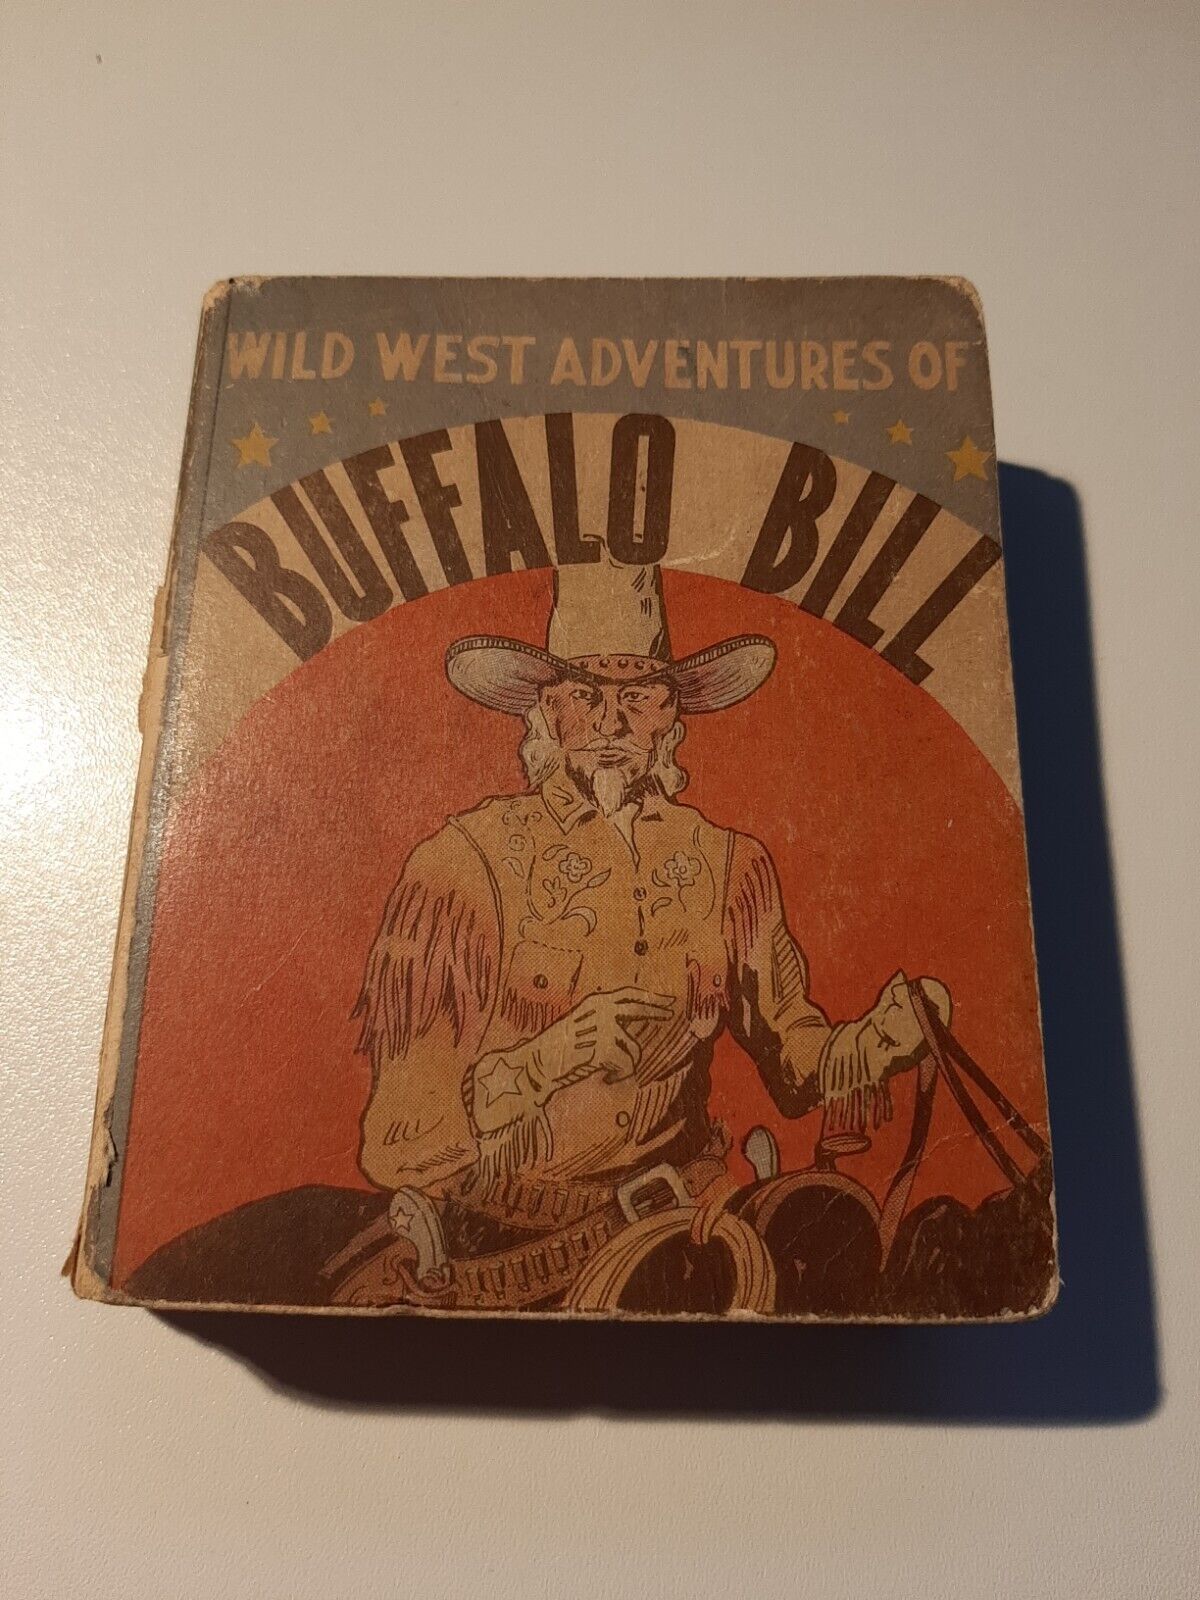 US WHITMAN Wild West Adventures of Buffalo Bill SC Big Little Book PRINTED 1935